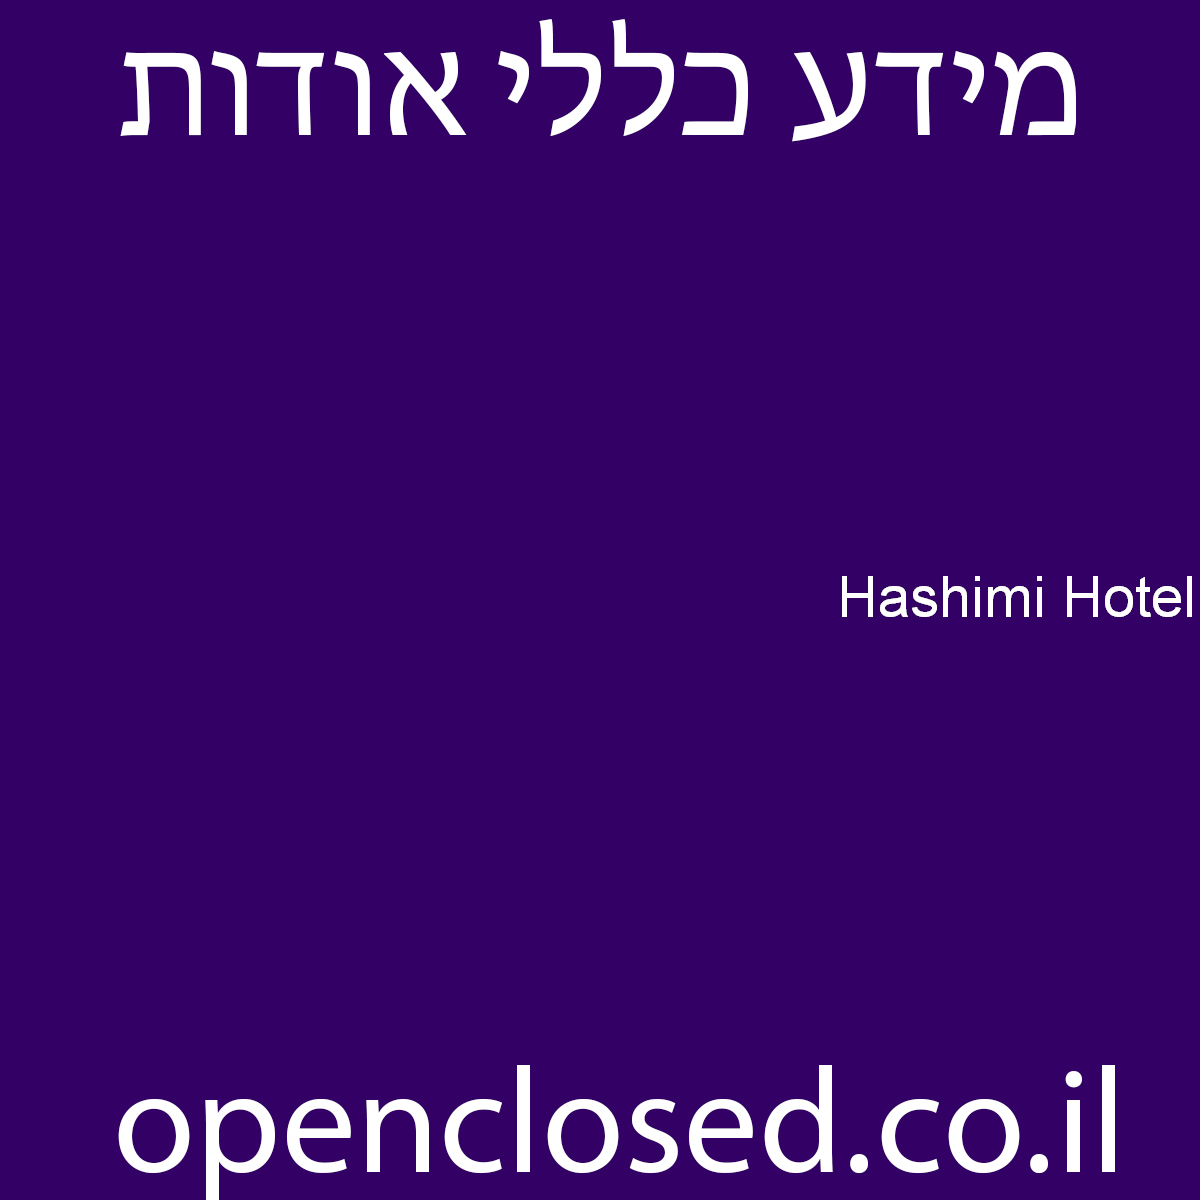 Hashimi Hotel